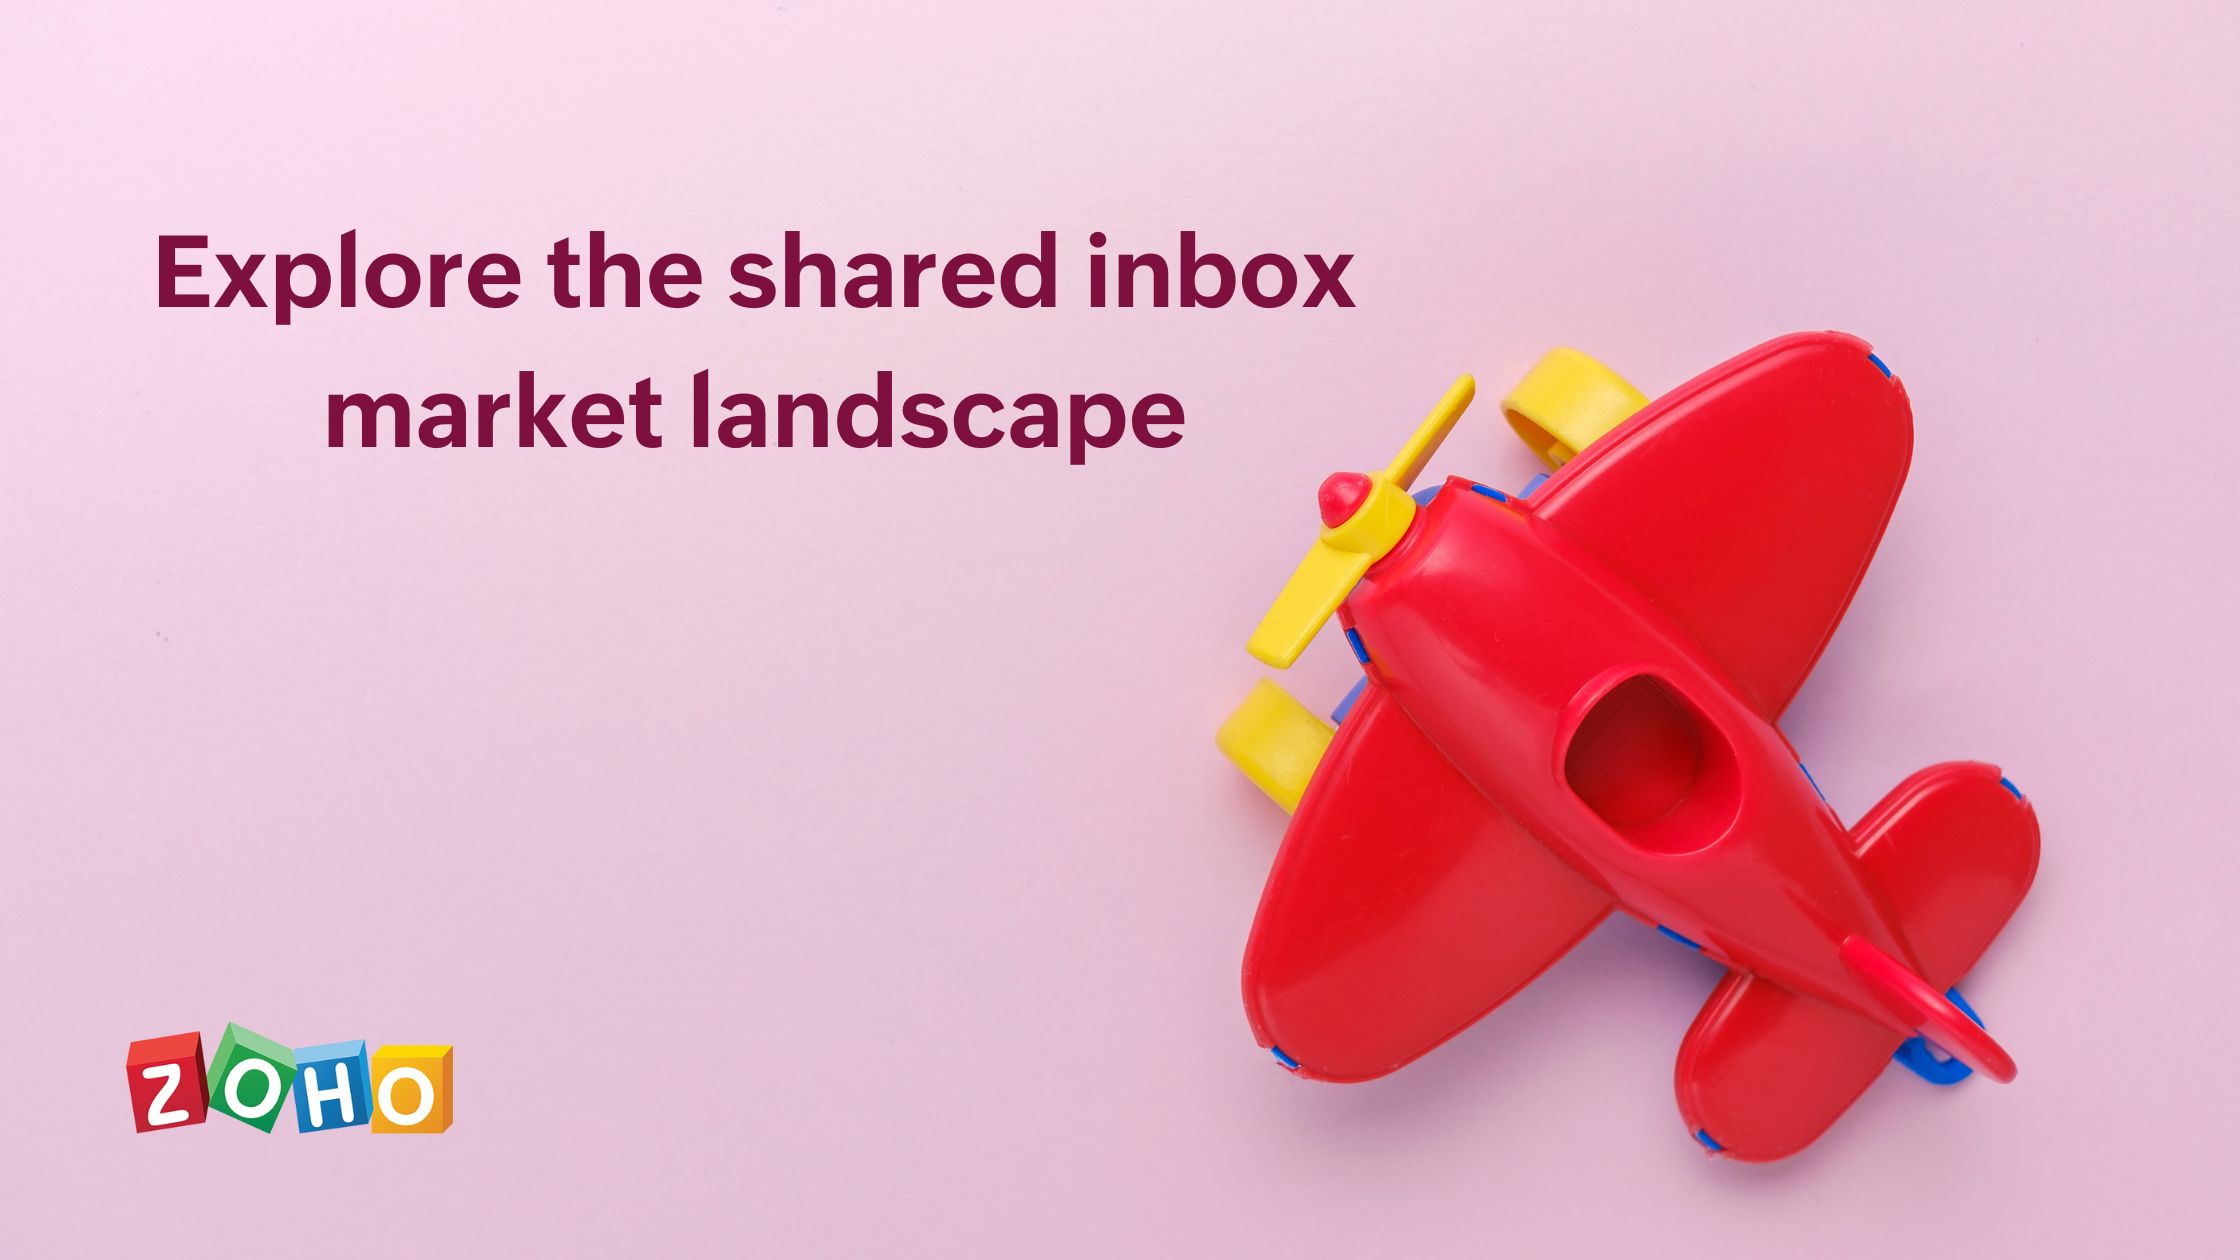 Explore shared inbox tool market landscape 